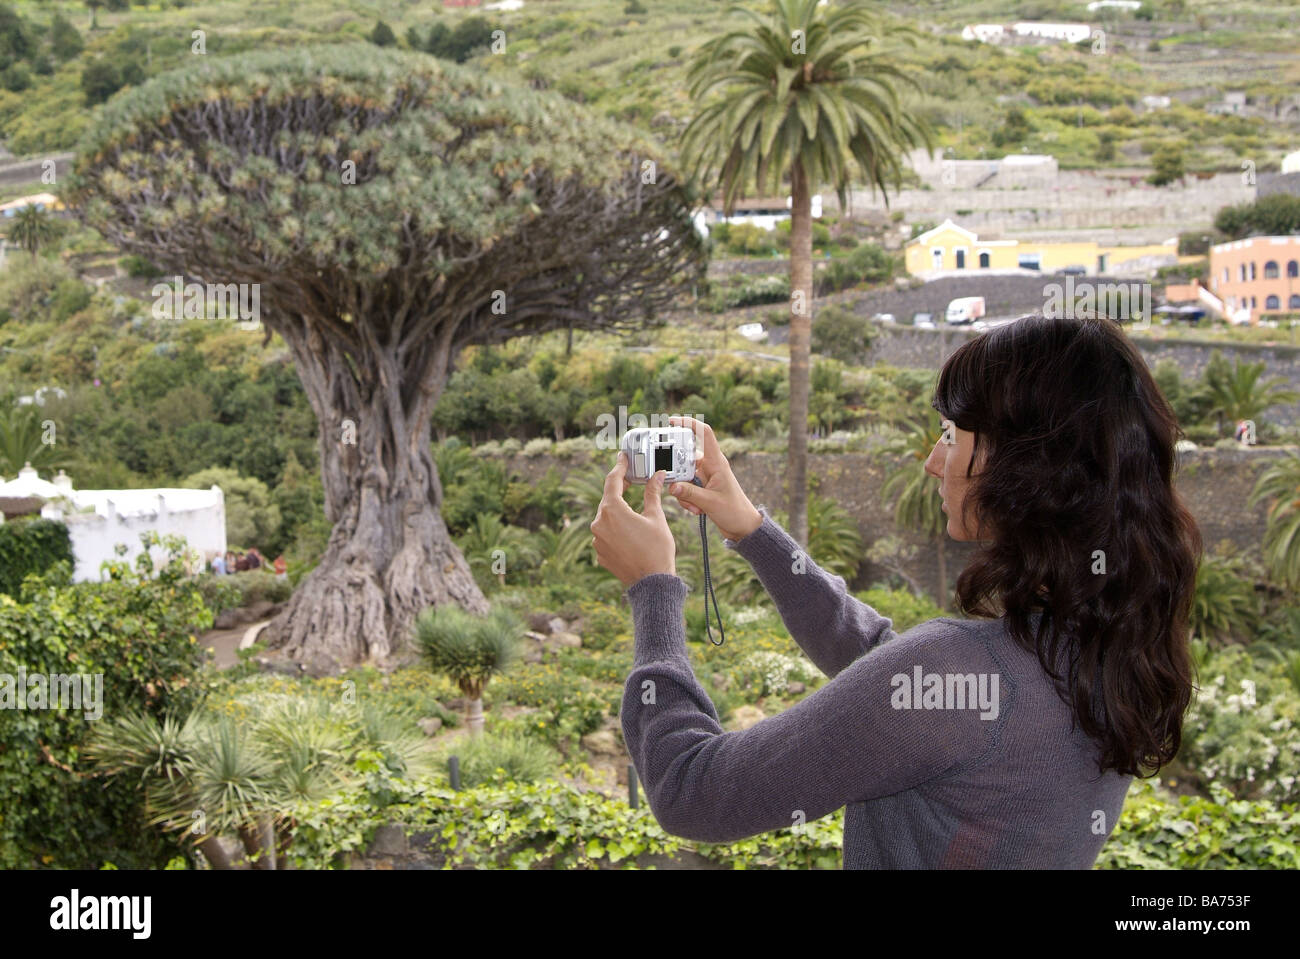 Spanien Kanaren Insel Teneriffa Icod de lose Vinos Drachenbaum Frau junge Fotos 20-30 Jahre alten Baum-Digitalkamera Stockfoto